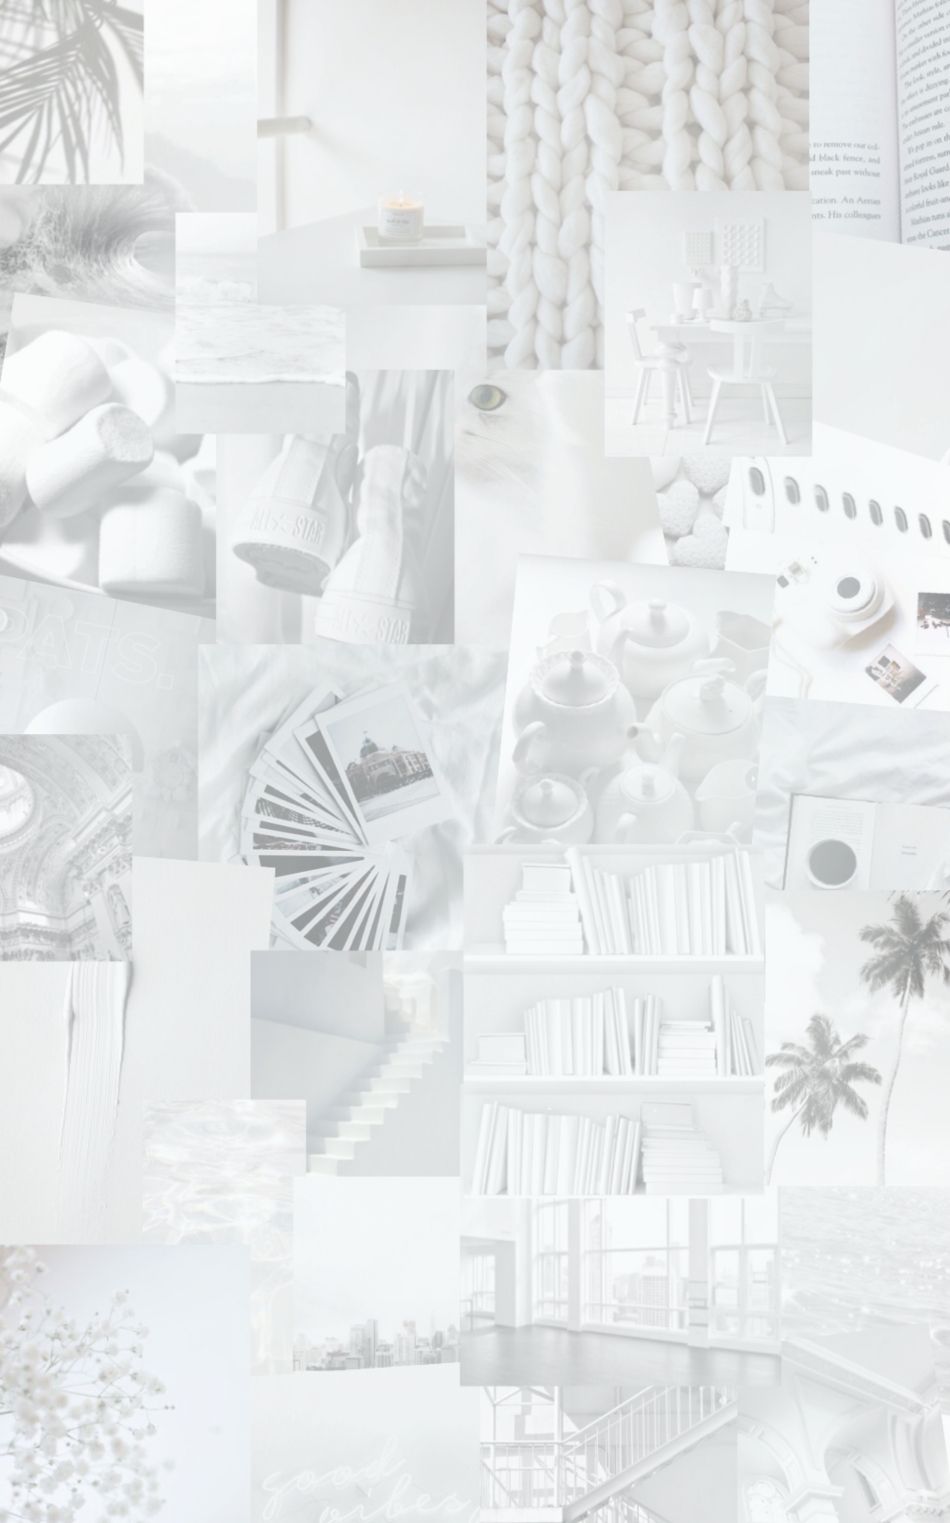 White Aesthetic iPhone Wallpaper. Aesthetic desktop wallpaper, White wallpaper, iPhone wallpaper tumblr aesthetic